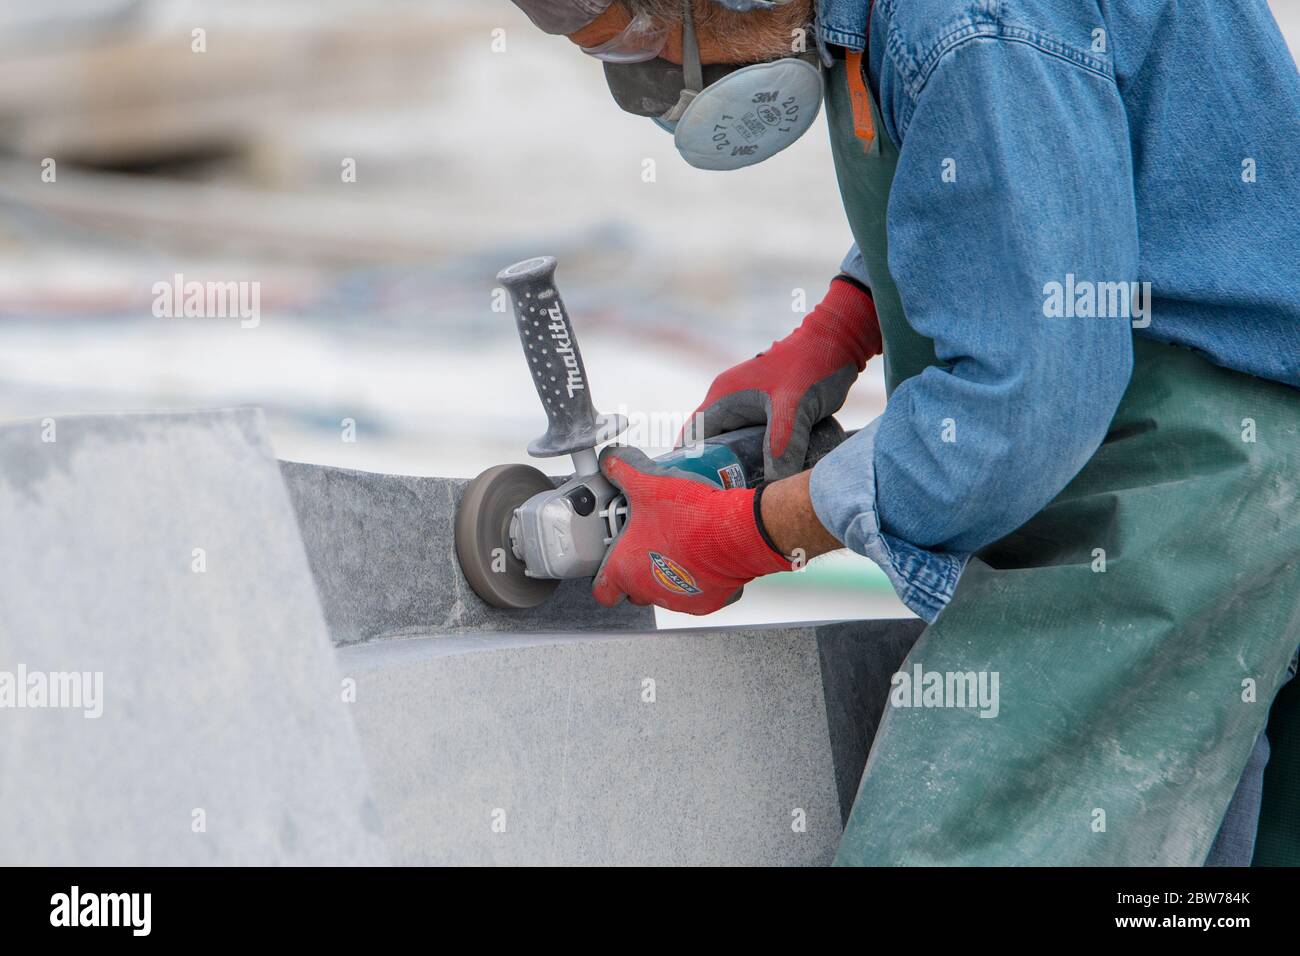 Saint John, New Brunswick, Canada - September 2, 2018: A sculptor uses power tools to shape to carve stone. Stock Photo